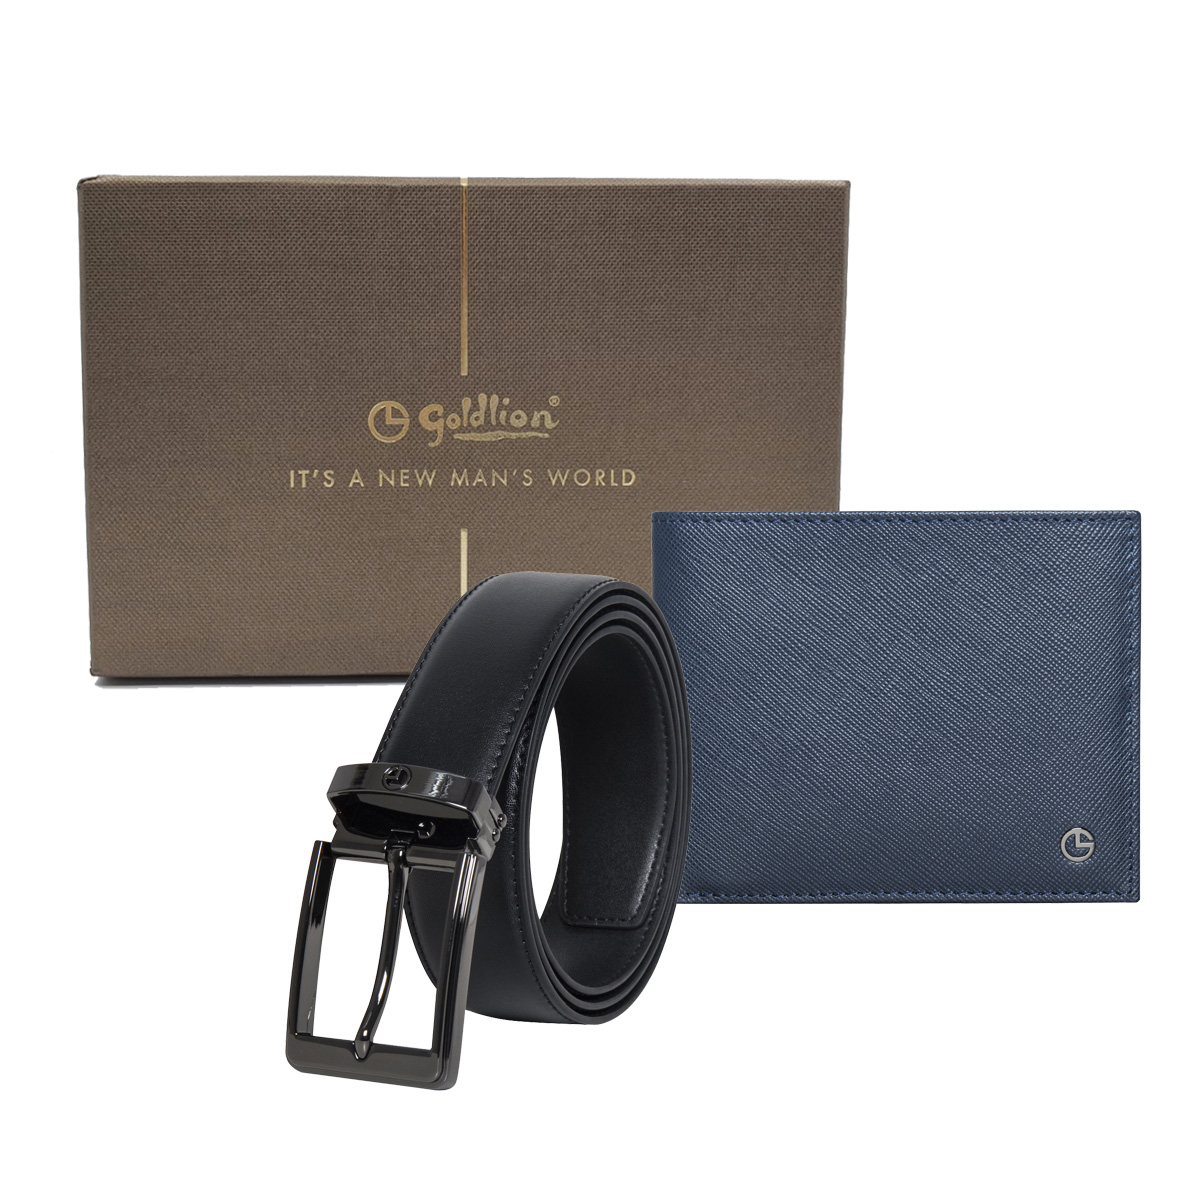 [Online Exclusive] Goldlion Genuine Leather RFID Wallet & Pin Belt Gift Set (8 Cards Slot, Navy Colour)